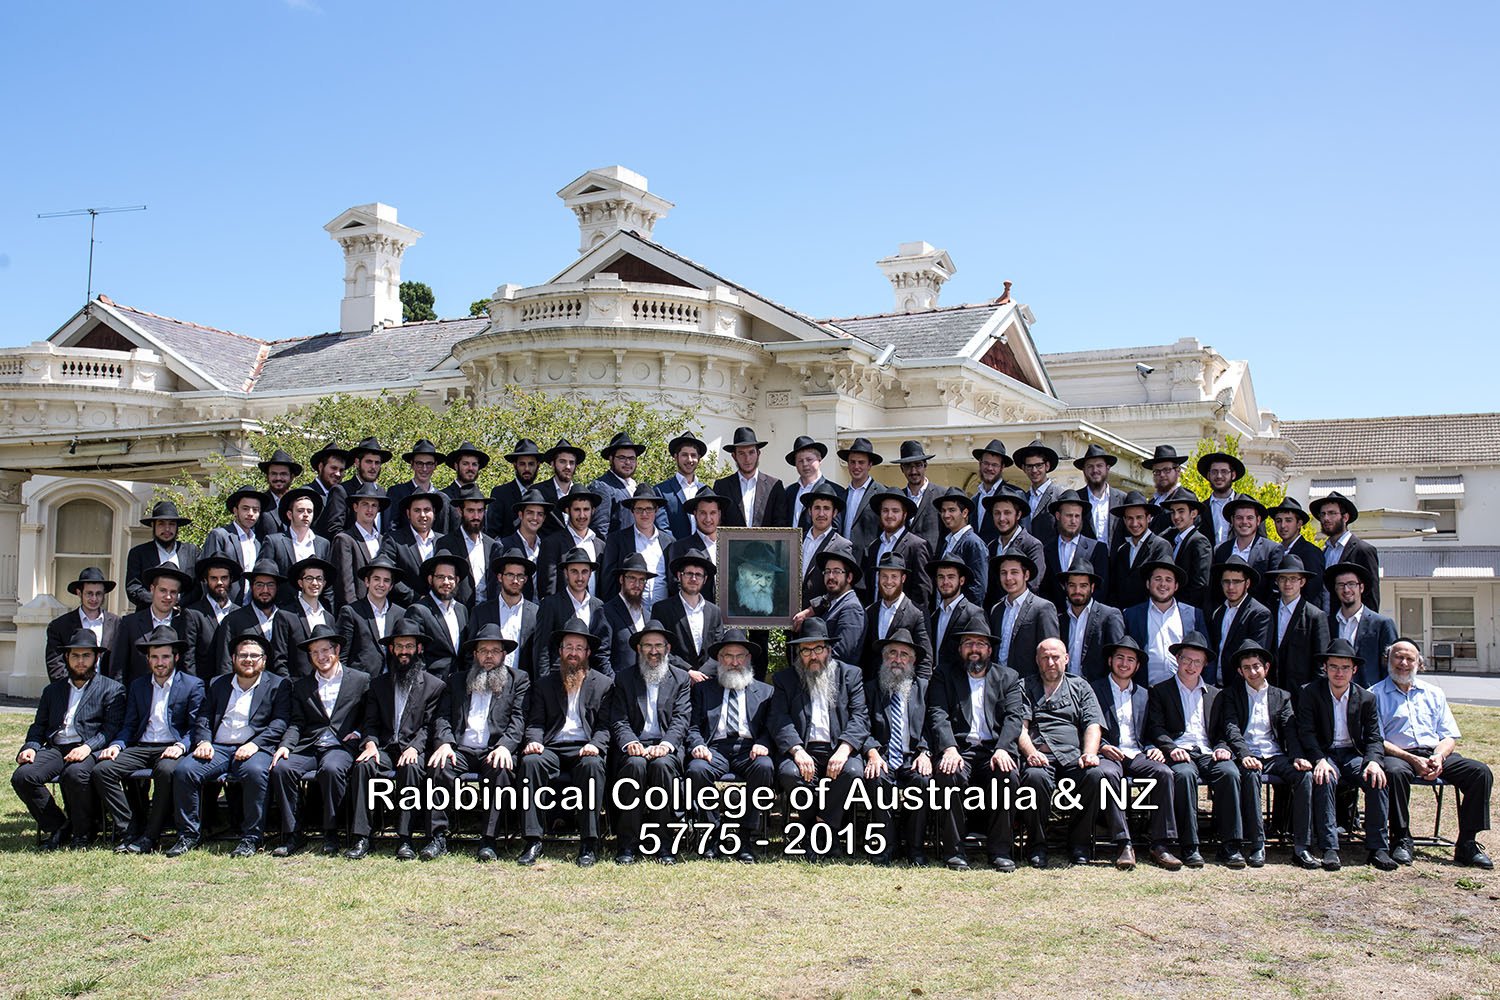 Rabbinical College of Australia & New Zealand 5775 - 2015